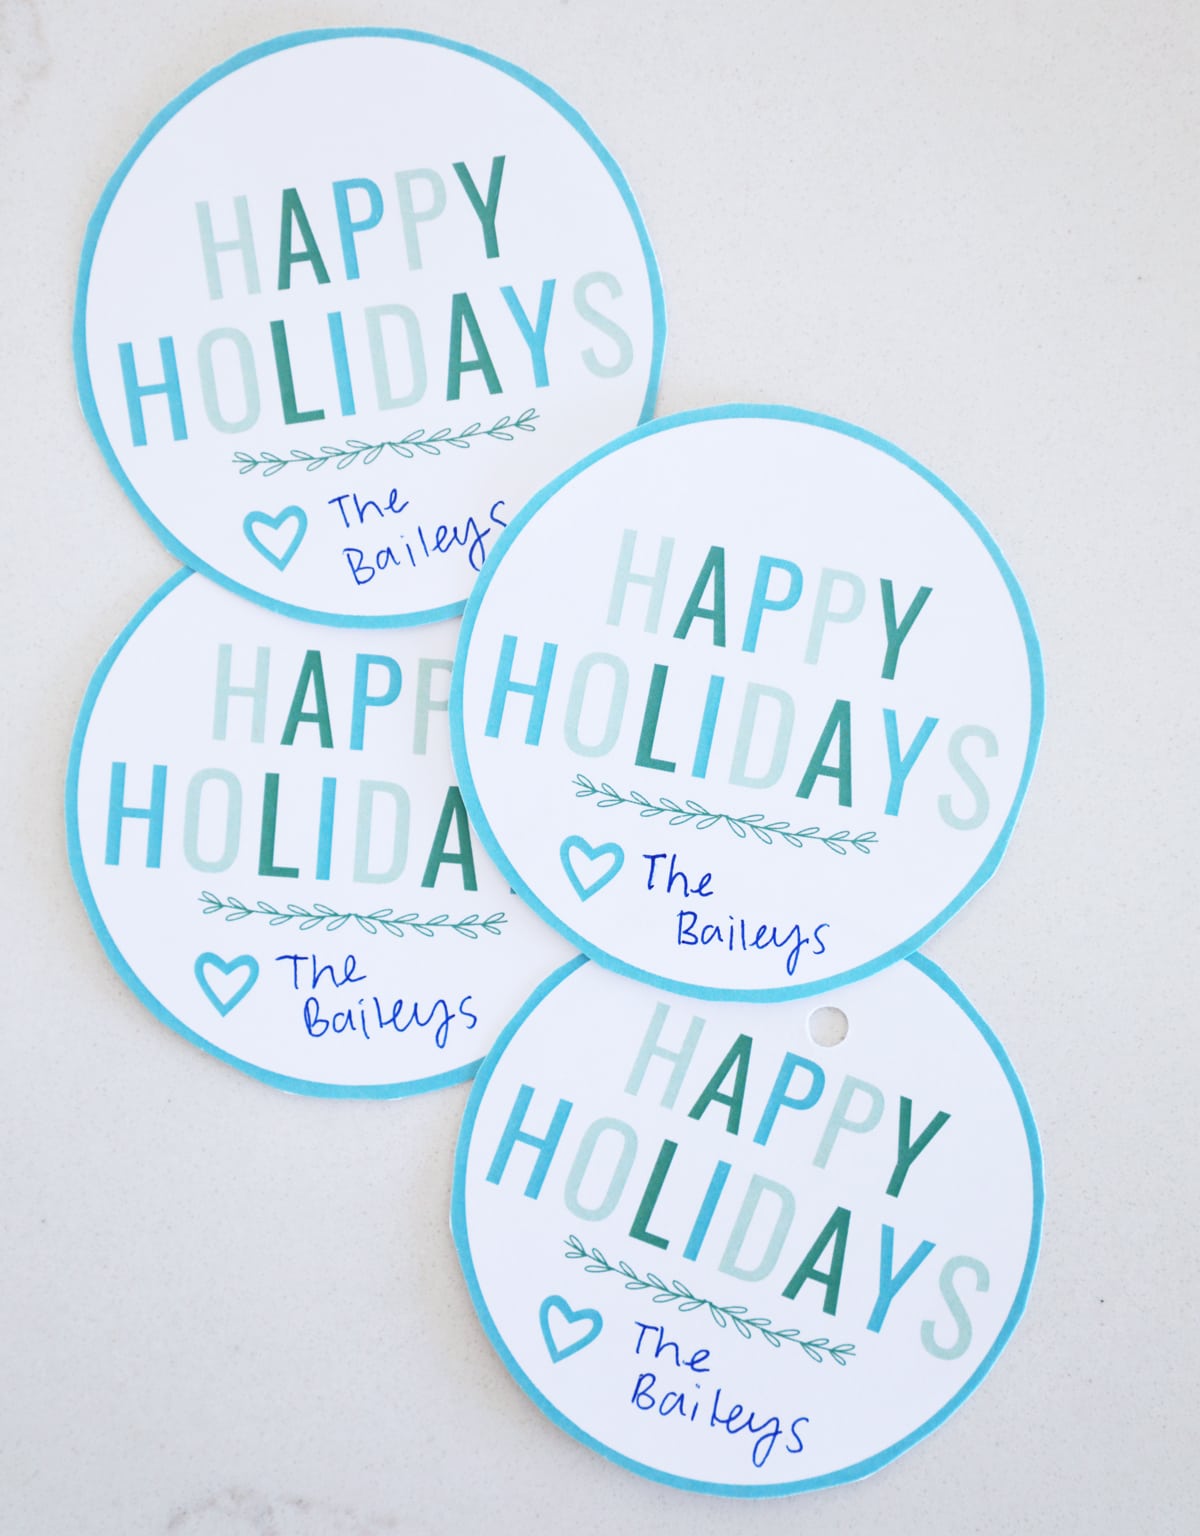 Circular gift tags that say "Happy Holidays" in various shades of blue and green.